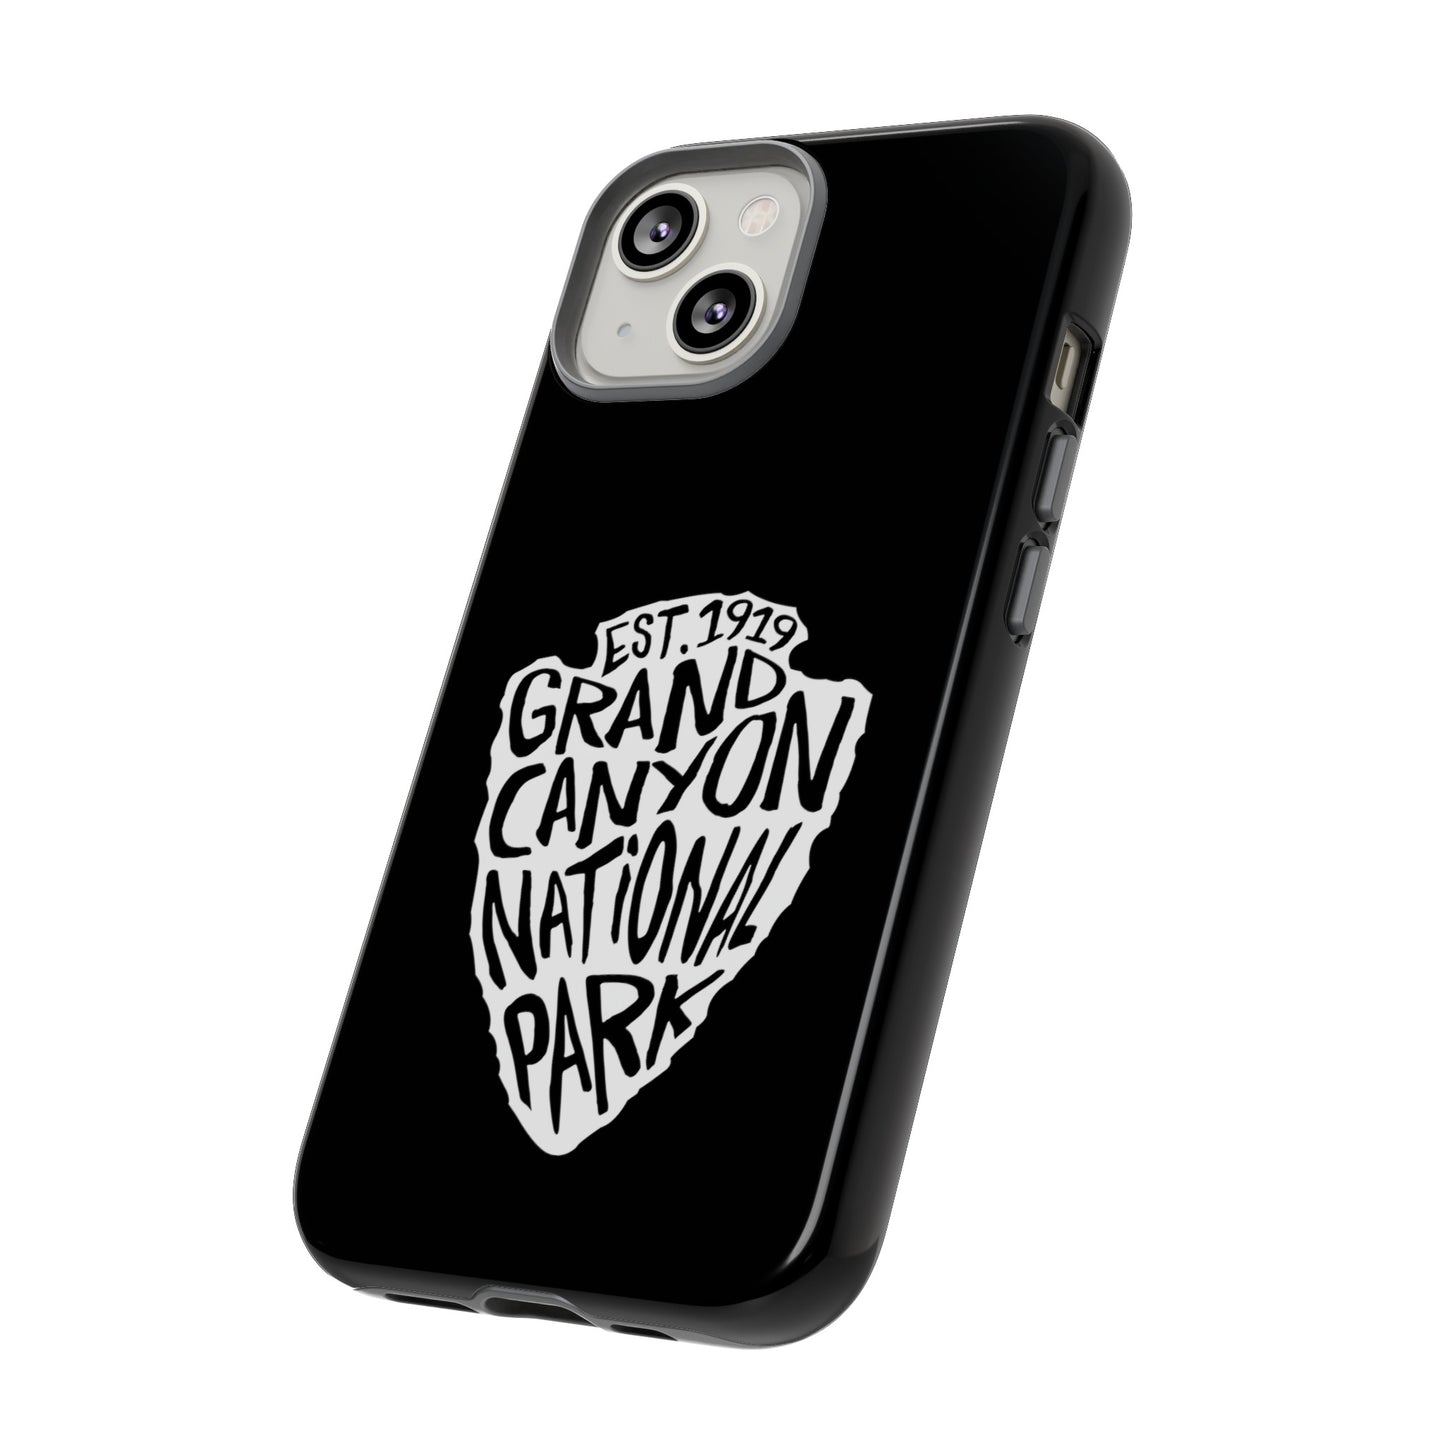 Grand Canyon National Park Phone Case - Arrowhead Design